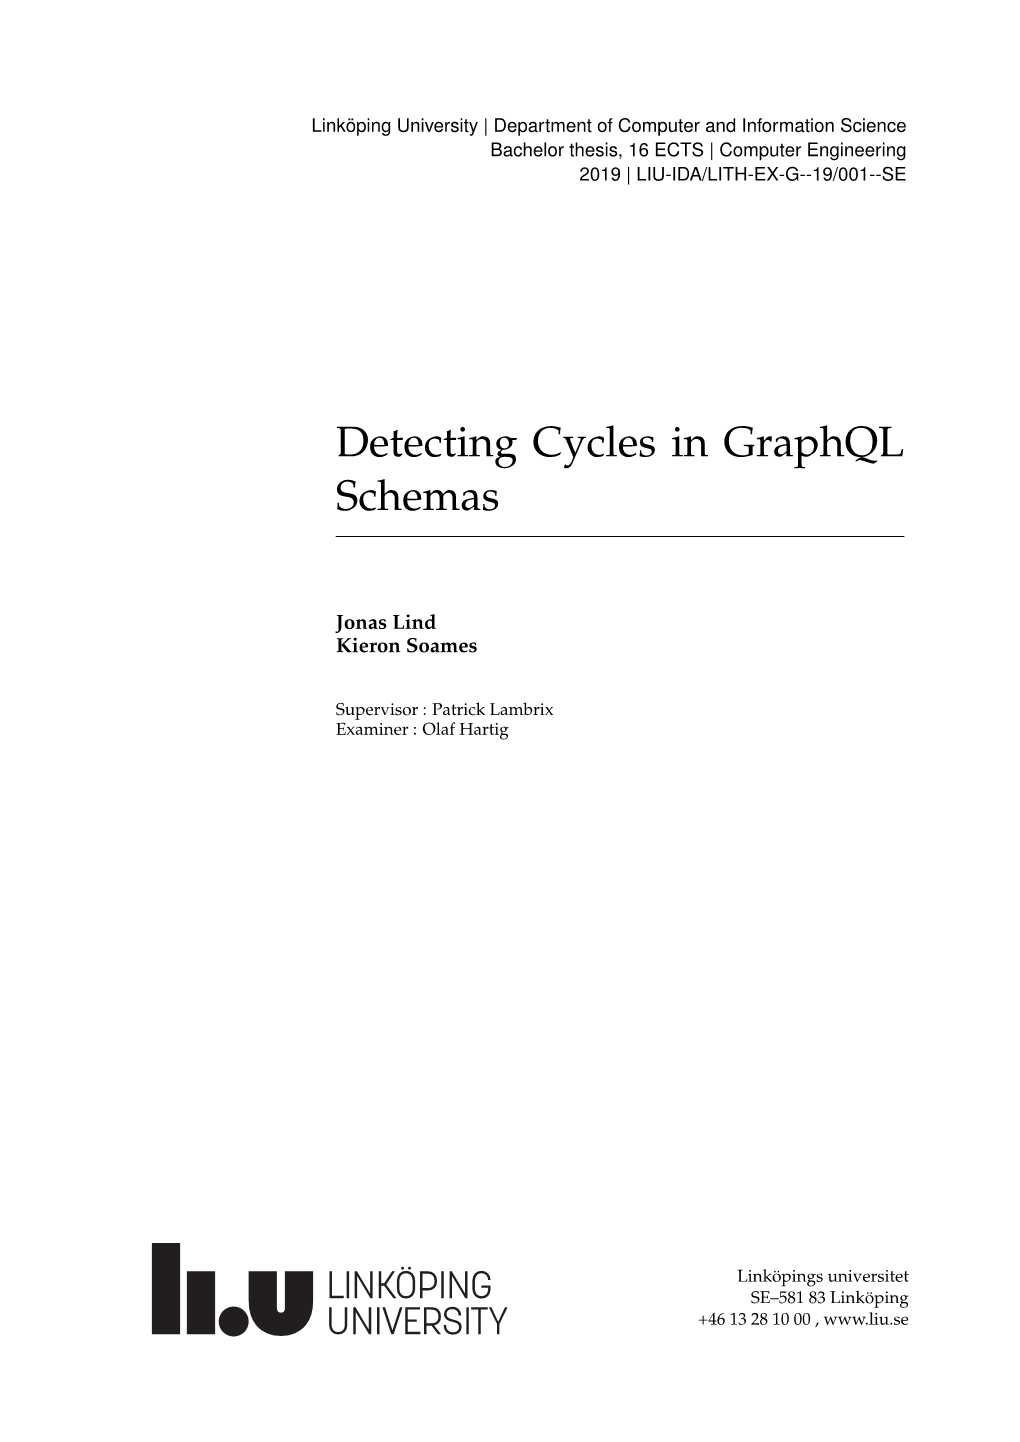 Detecting Cycles in Graphql Schemas